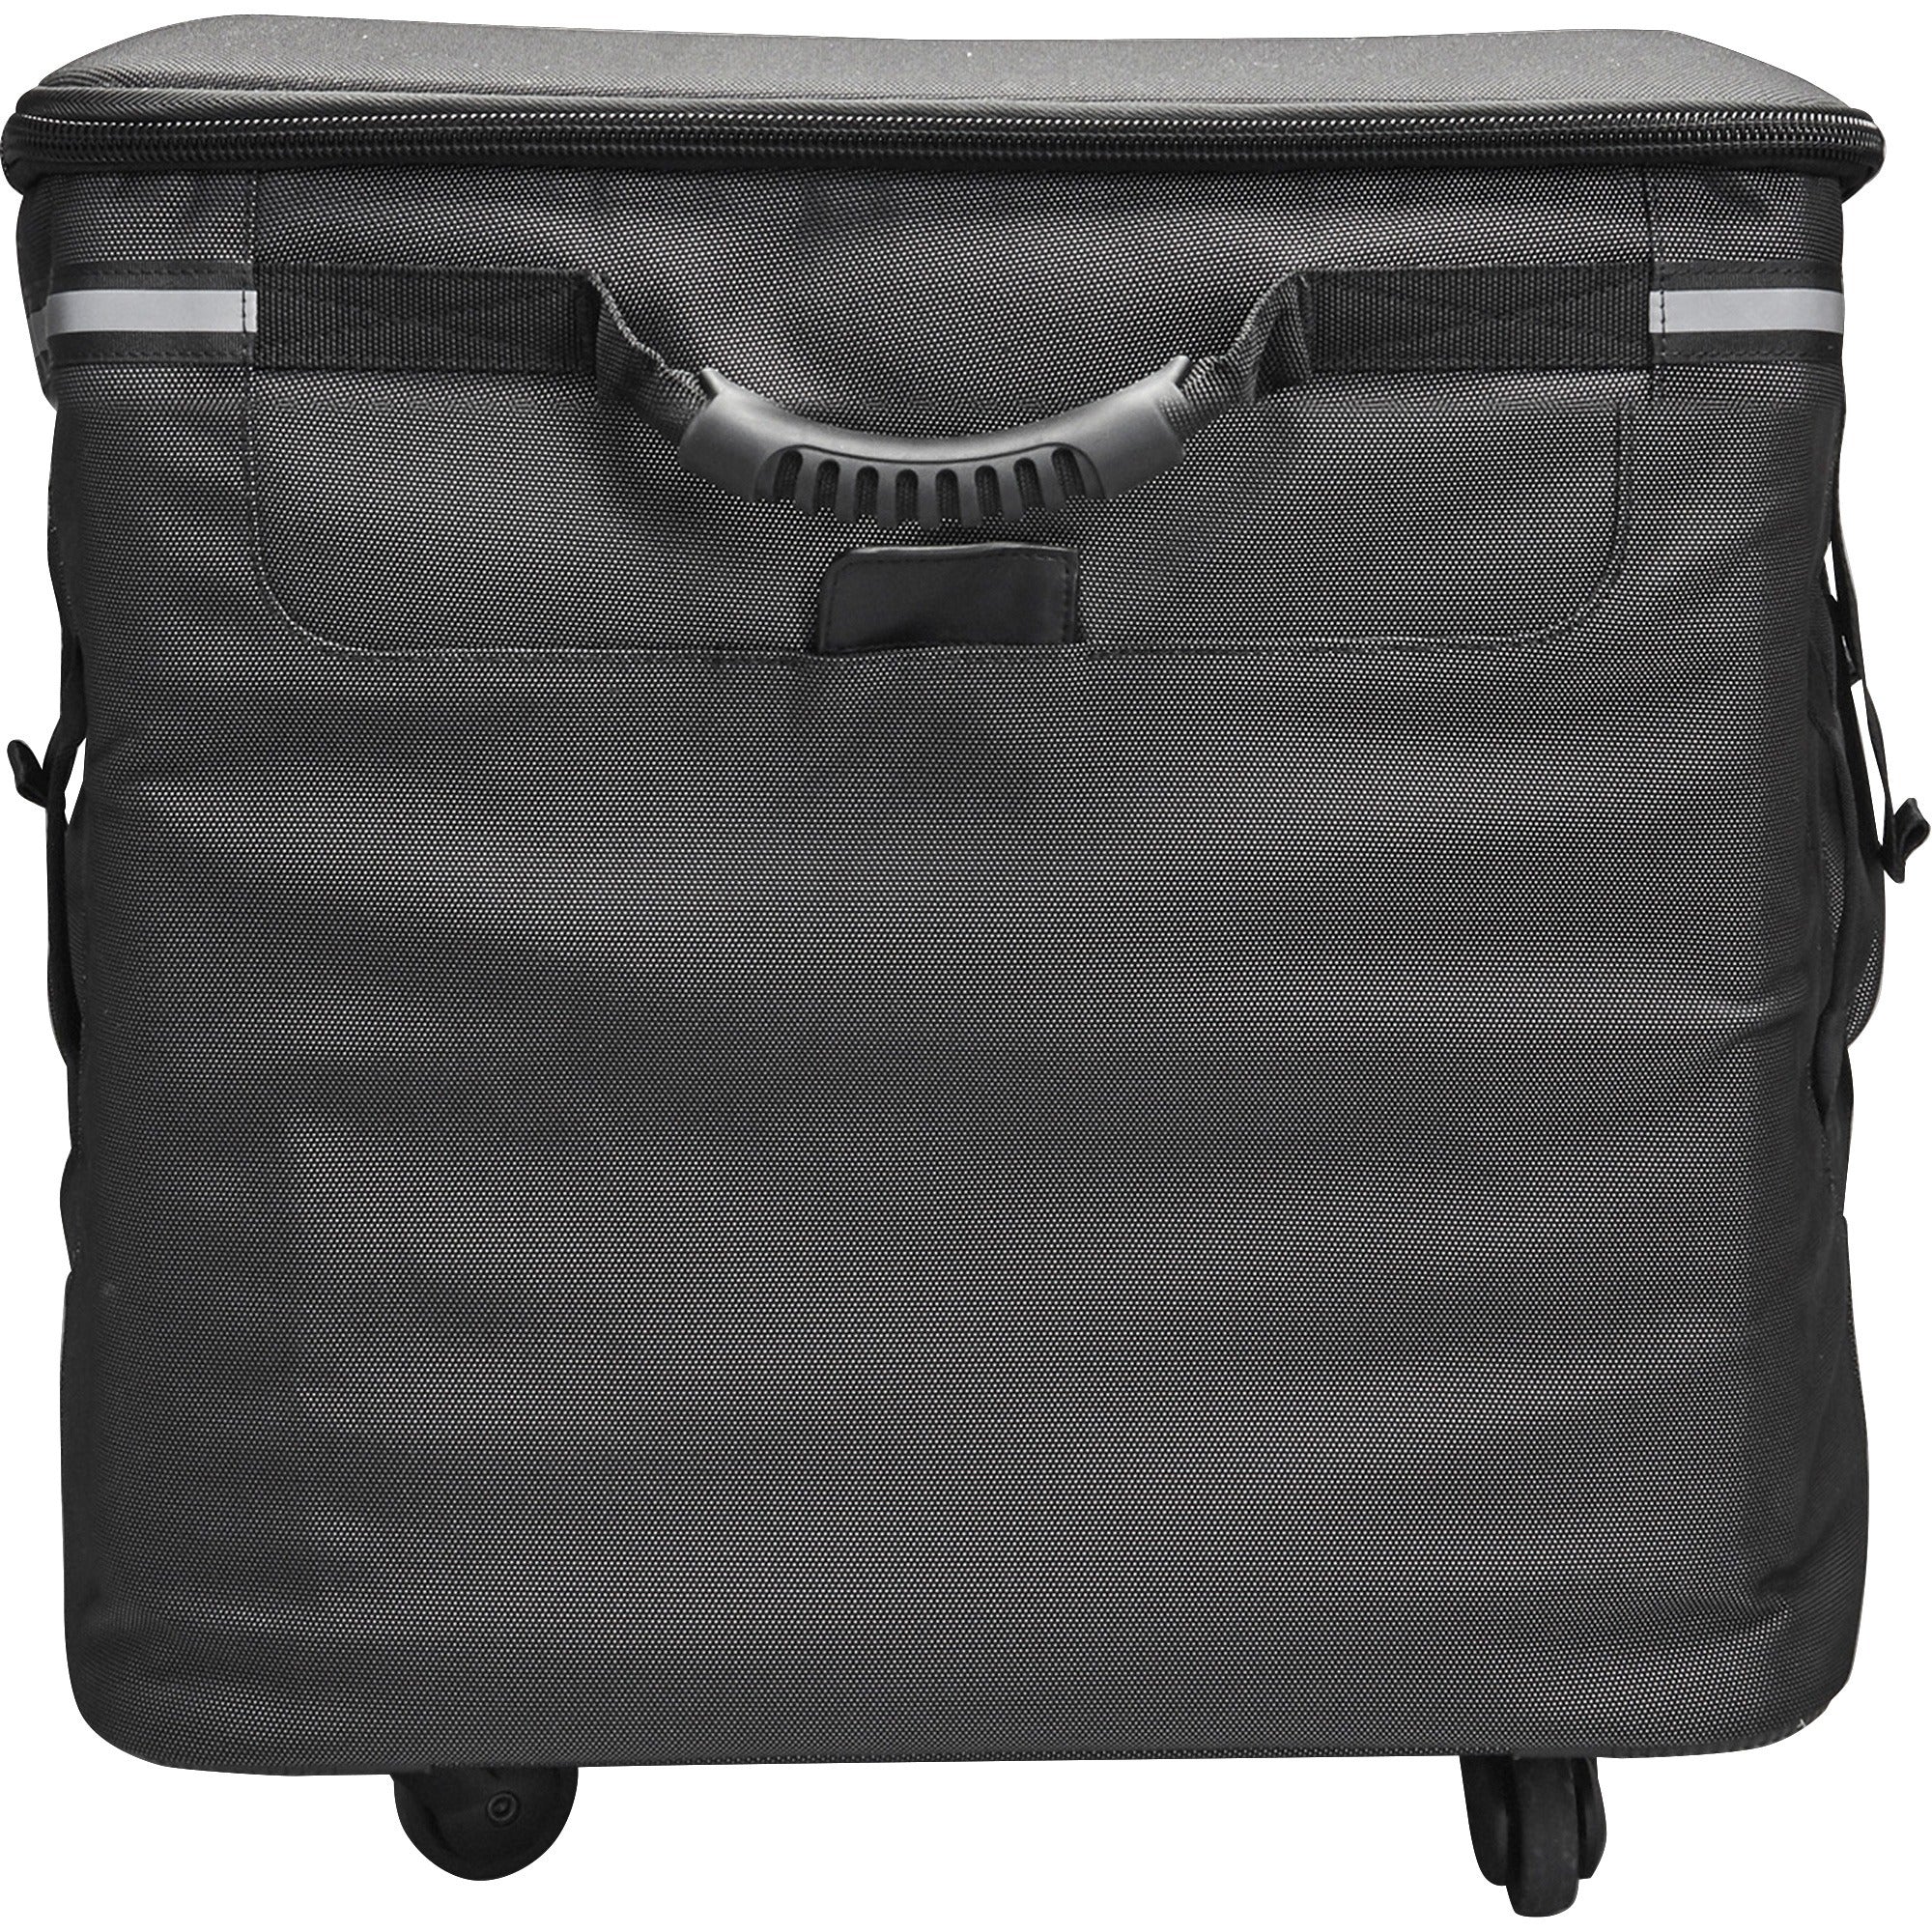 solo-pro-transporter-128-roller-travel-luggage-bottom-case-box-1-of-2-black-205-x-26-x-1875-bump-resistant-black-luggage-128l-volume-capacity-1-pack_uslssc11110 - 1